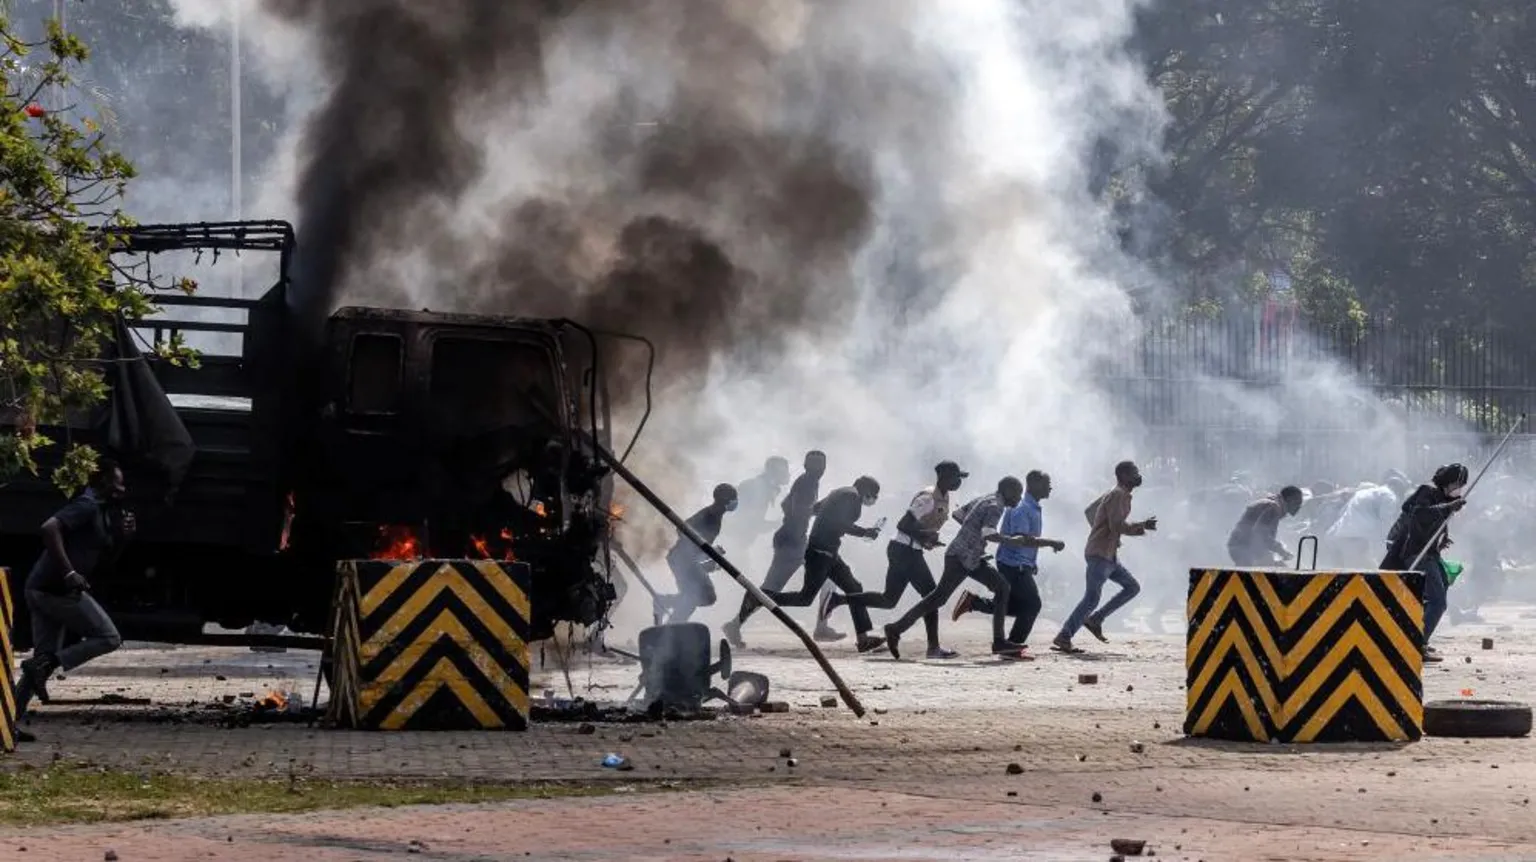 Police fire tear gas at renewed Kenya protests